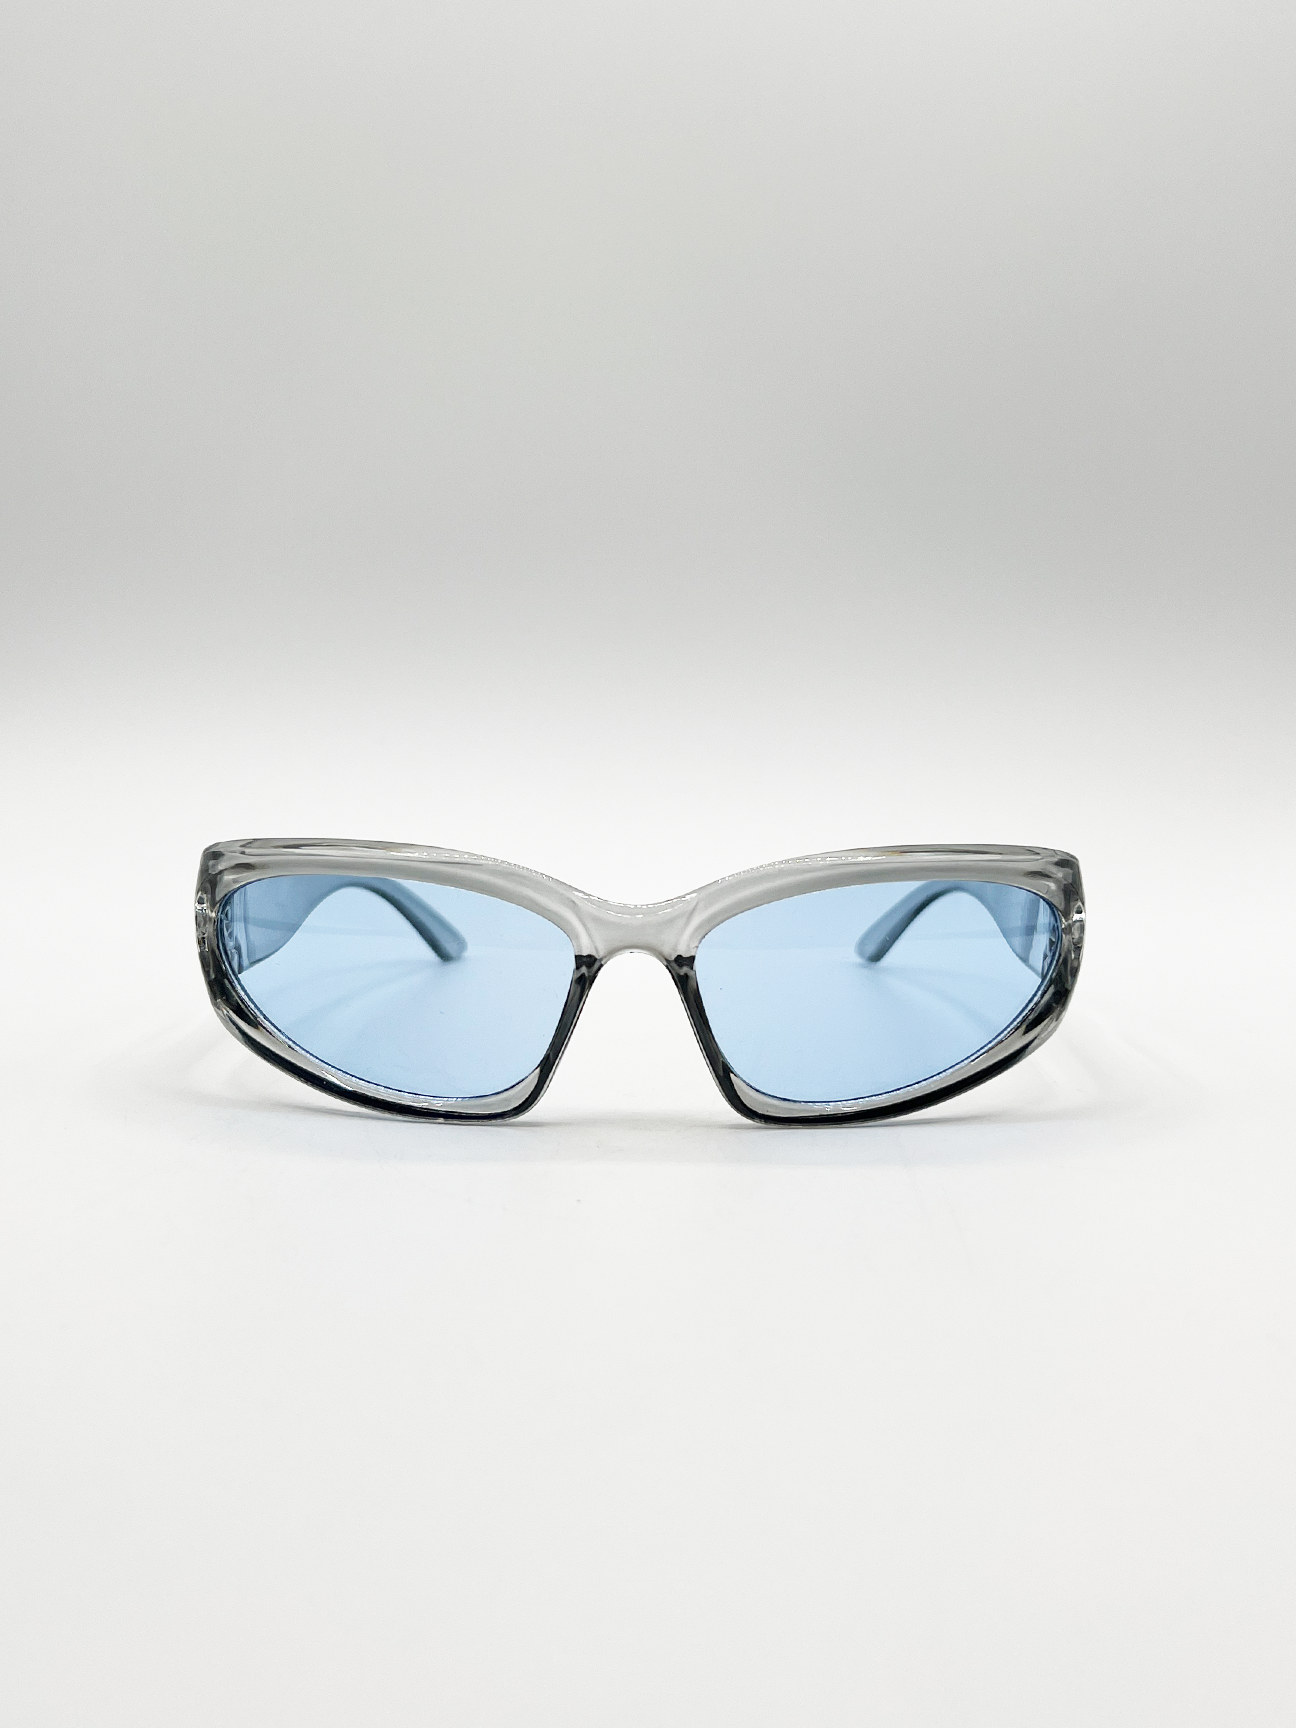 Wrap Around Racer Sunglasses in Translucent Blue